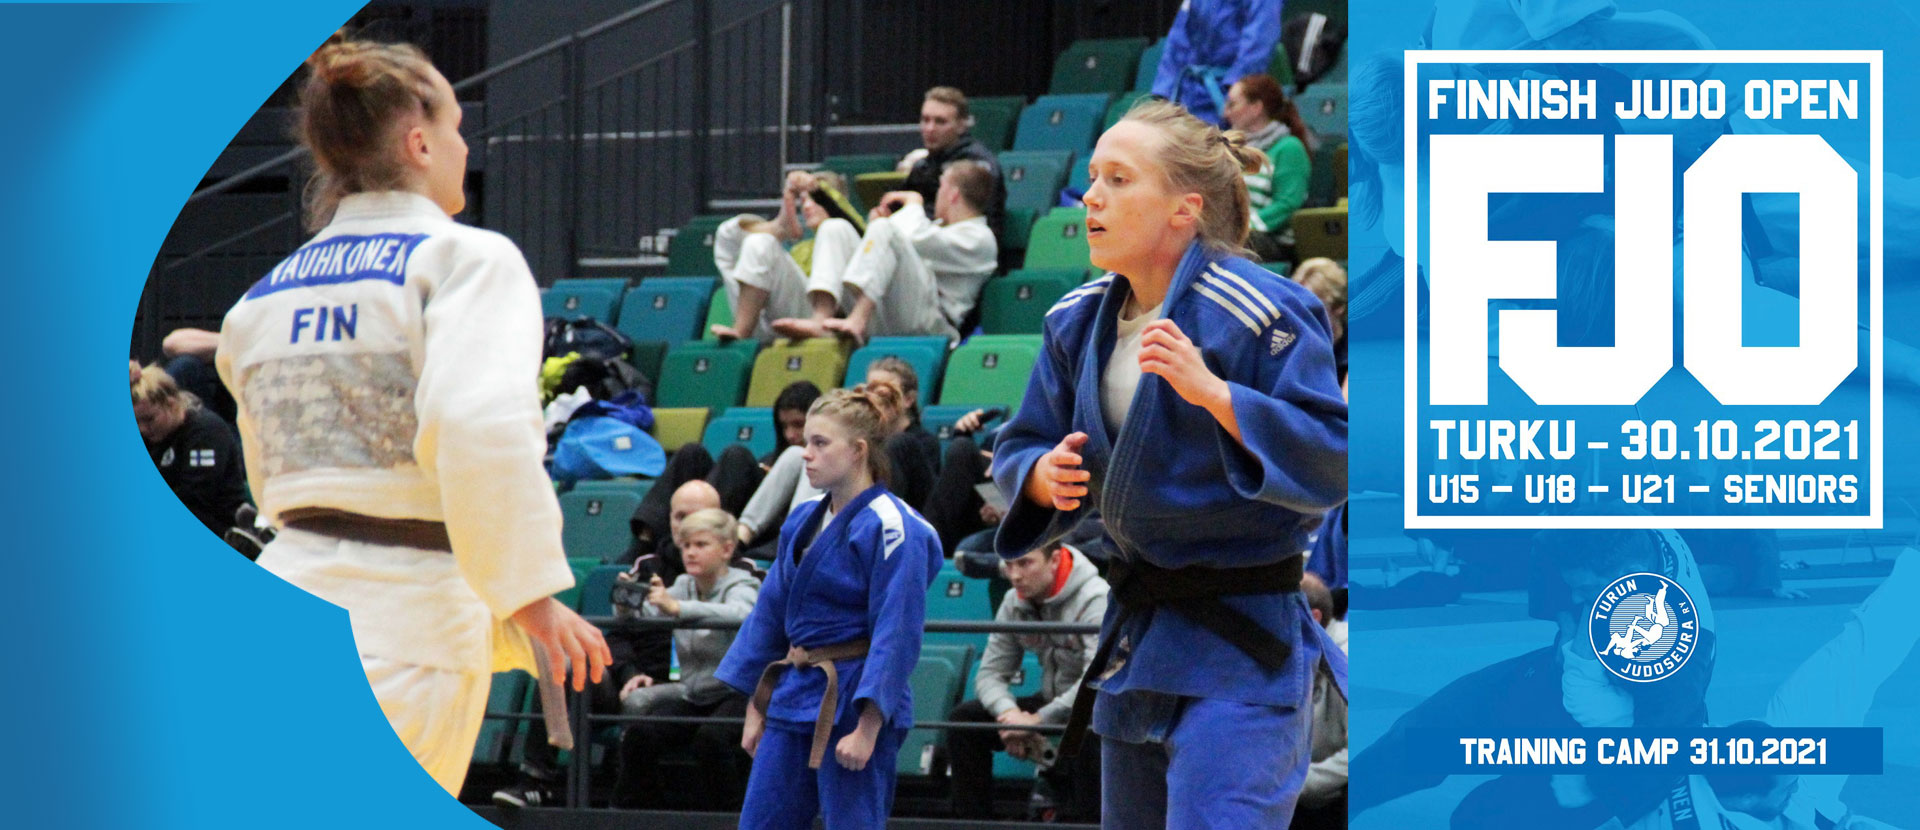 Finnish Judo Open news